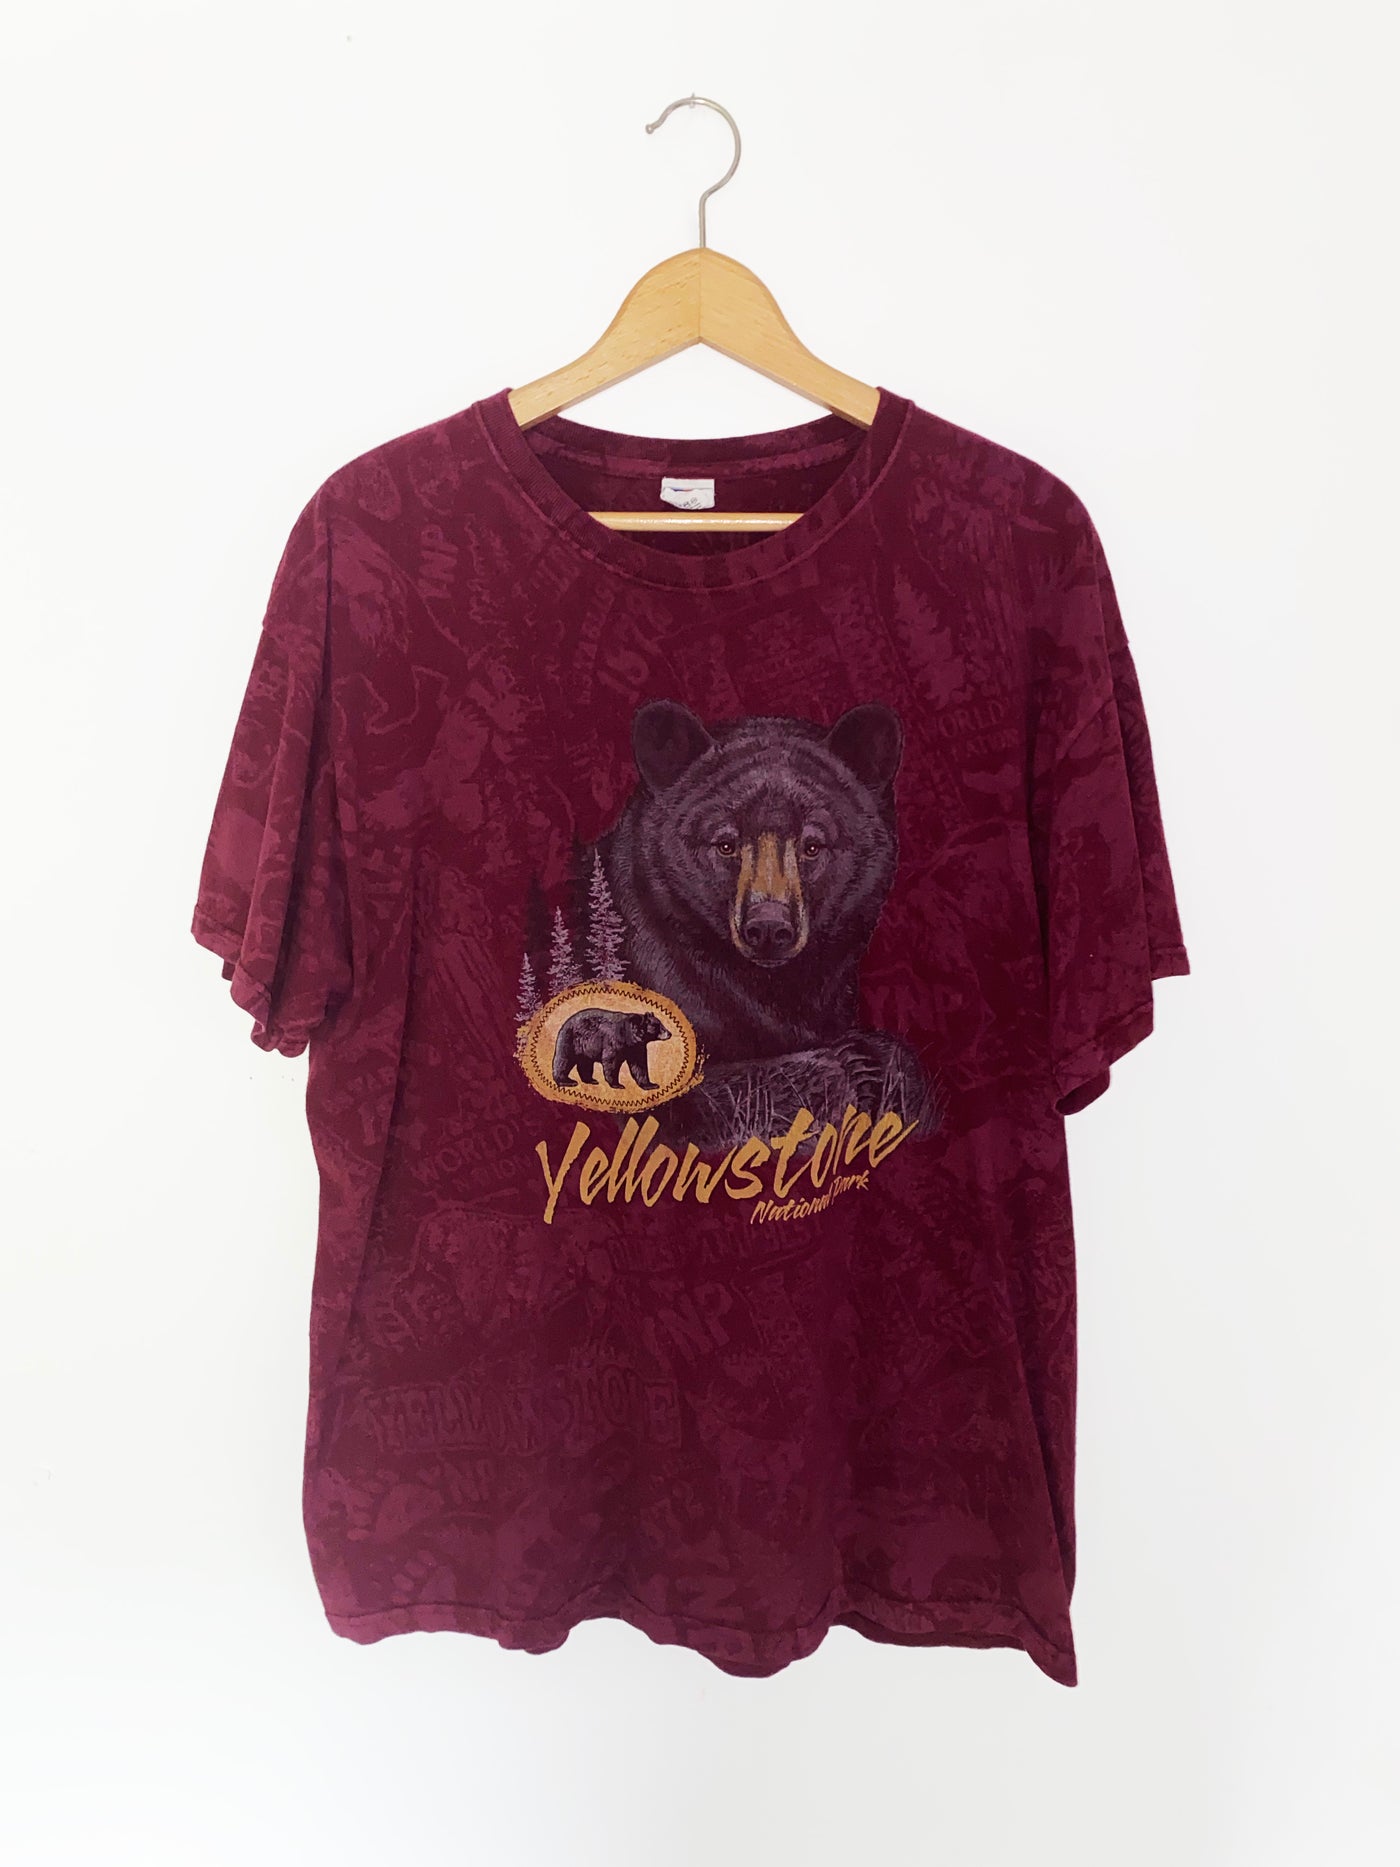 Vintage 90s Yellowstone National Park Bear T-Shirt